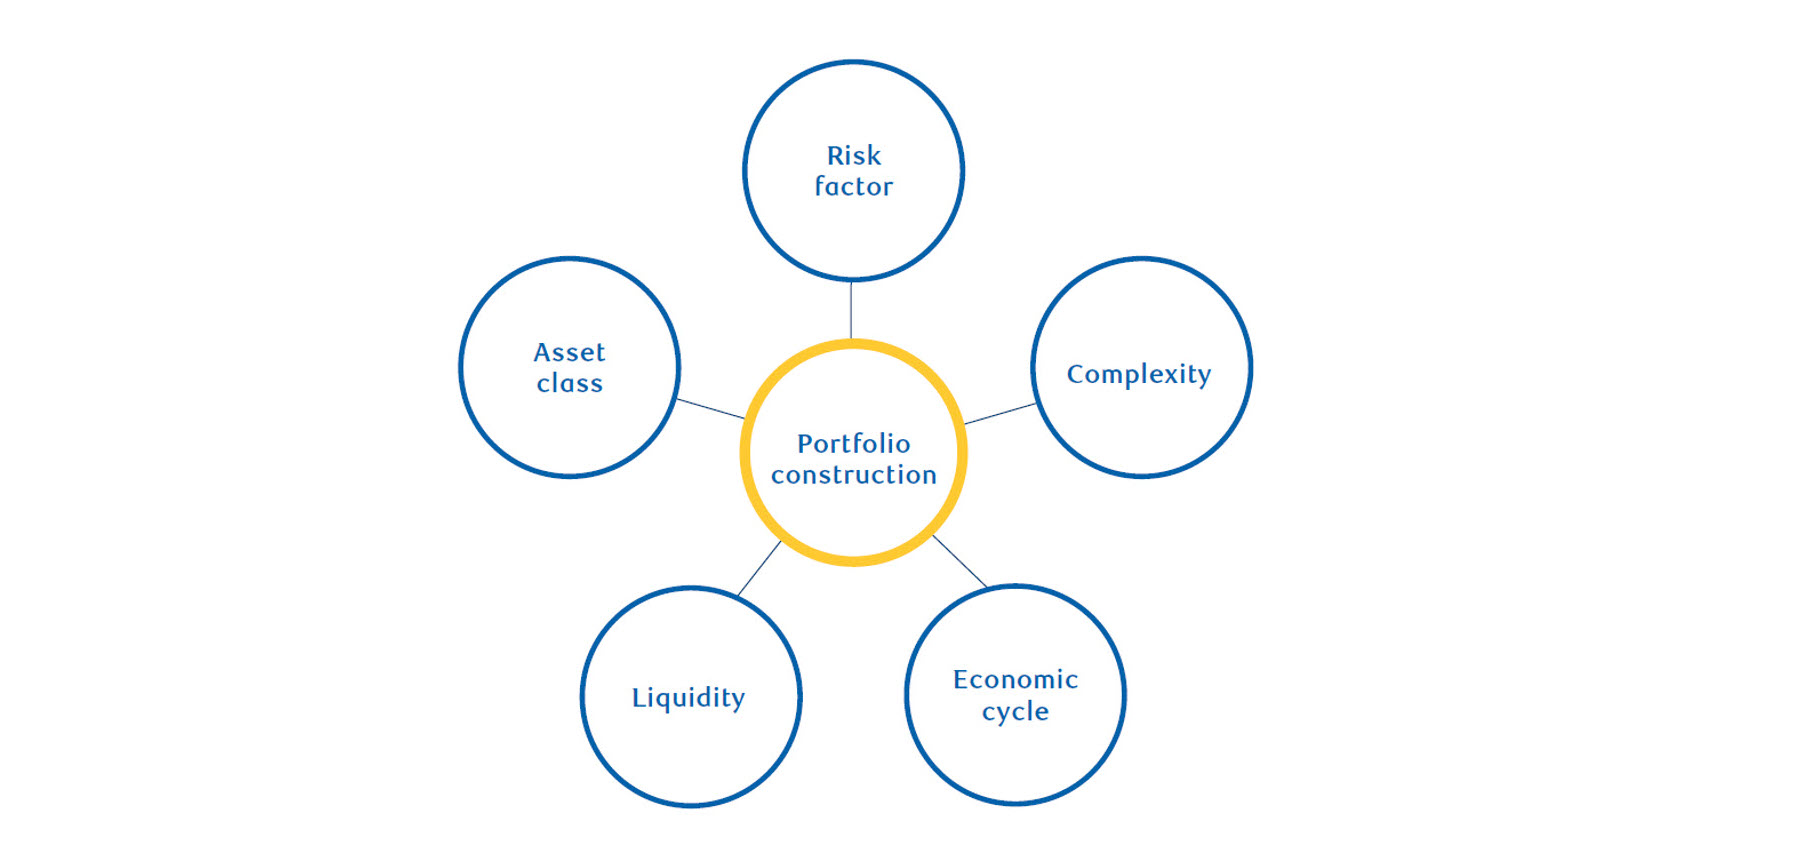 Portfolio Construction - Risk factor, complexity, Economic Cycle, Liquidity, Asset class